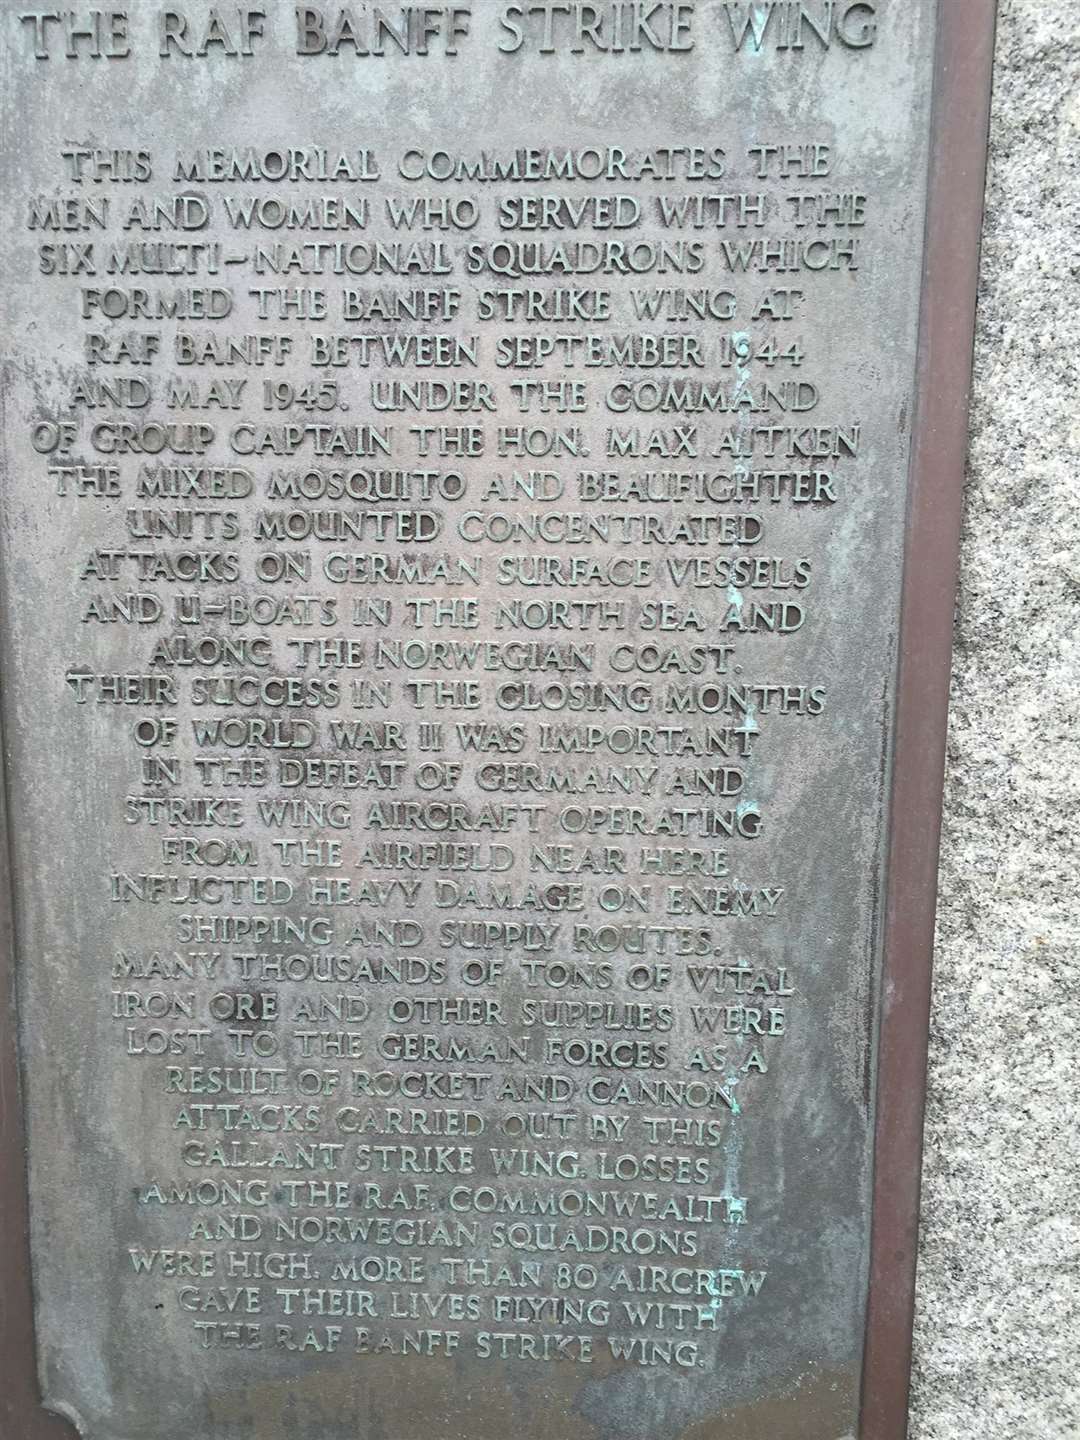 The RAF Strike Wing Memorial near Banff